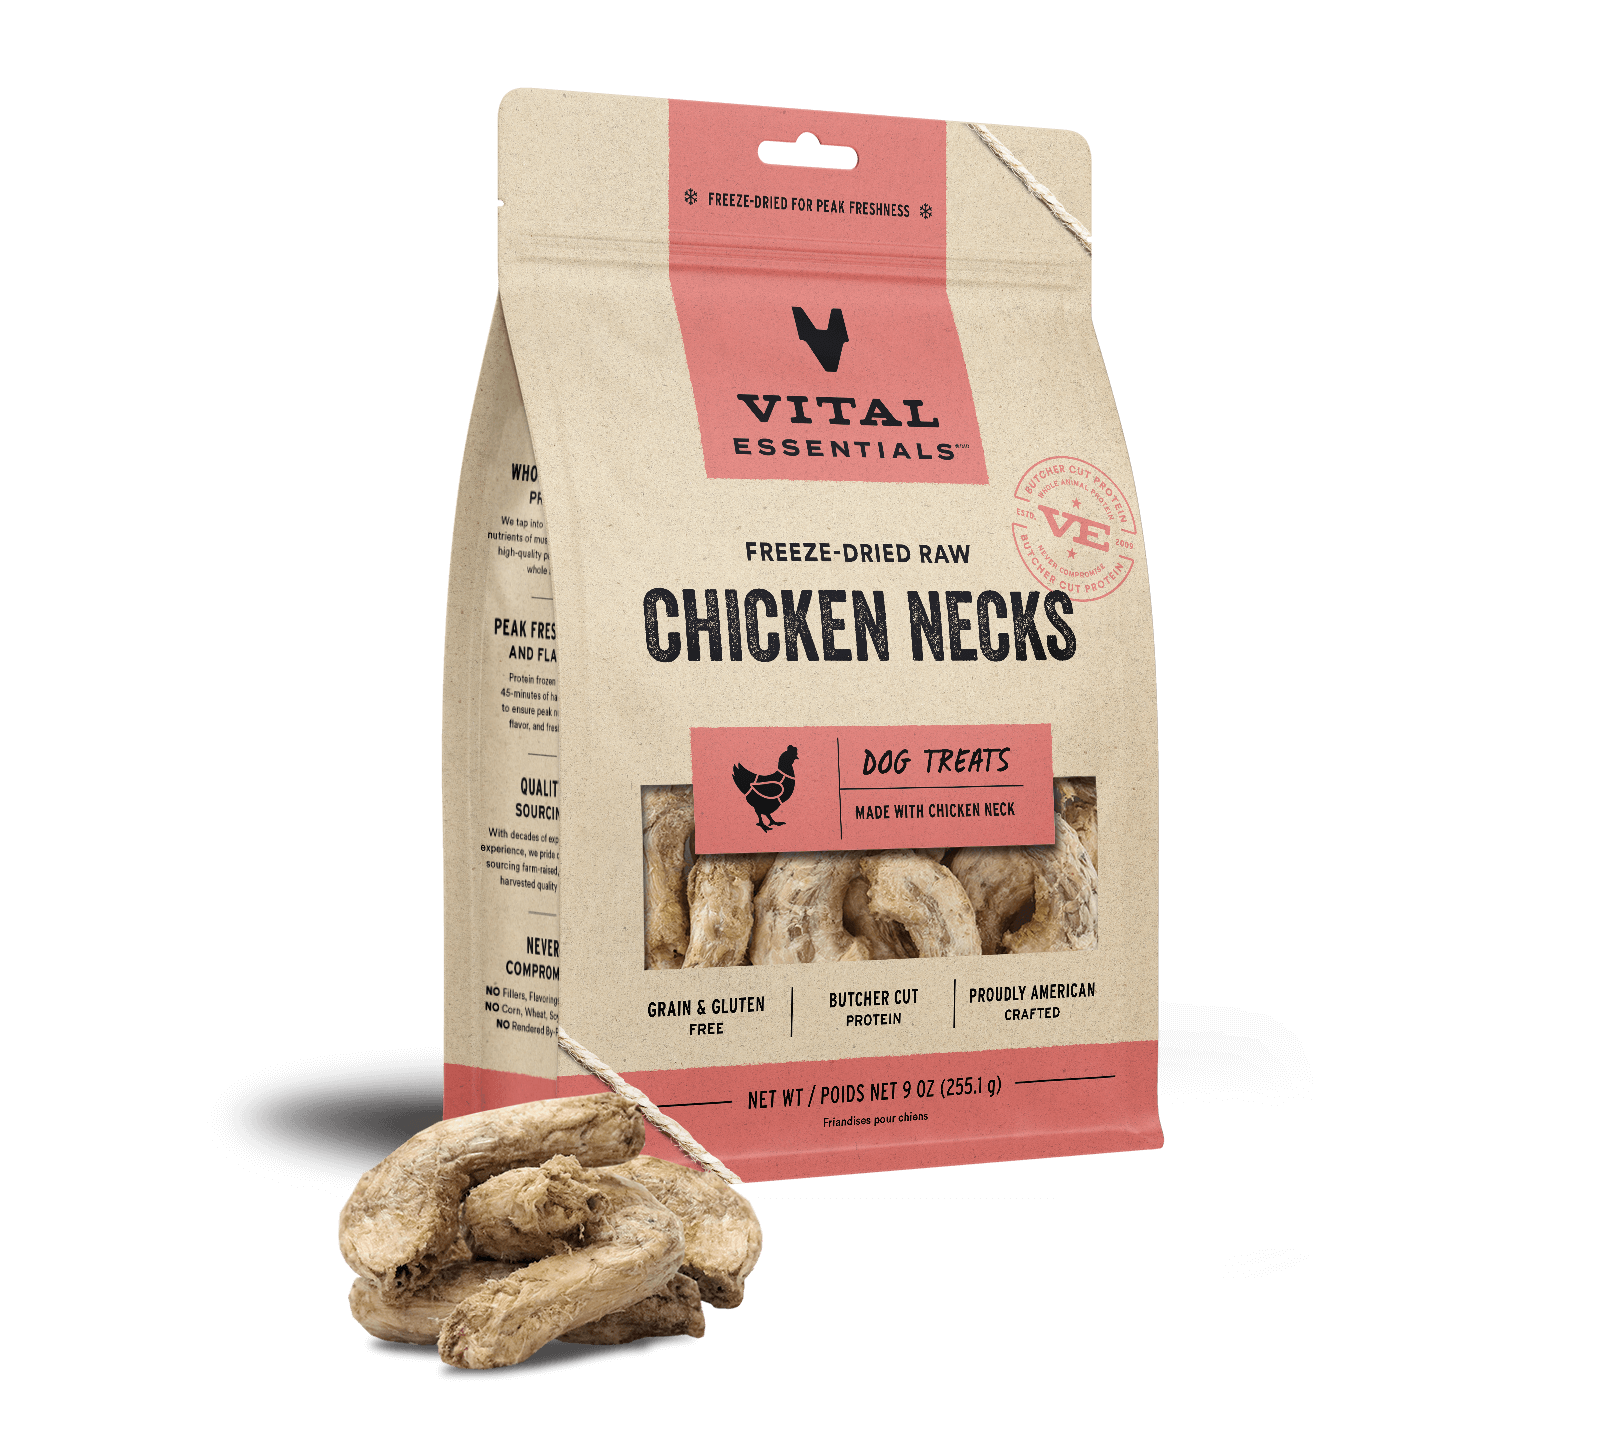 Vital Essentials Freeze-Dried Raw Chicken Necks Dog Treats, 9 oz - Items on Sale Now